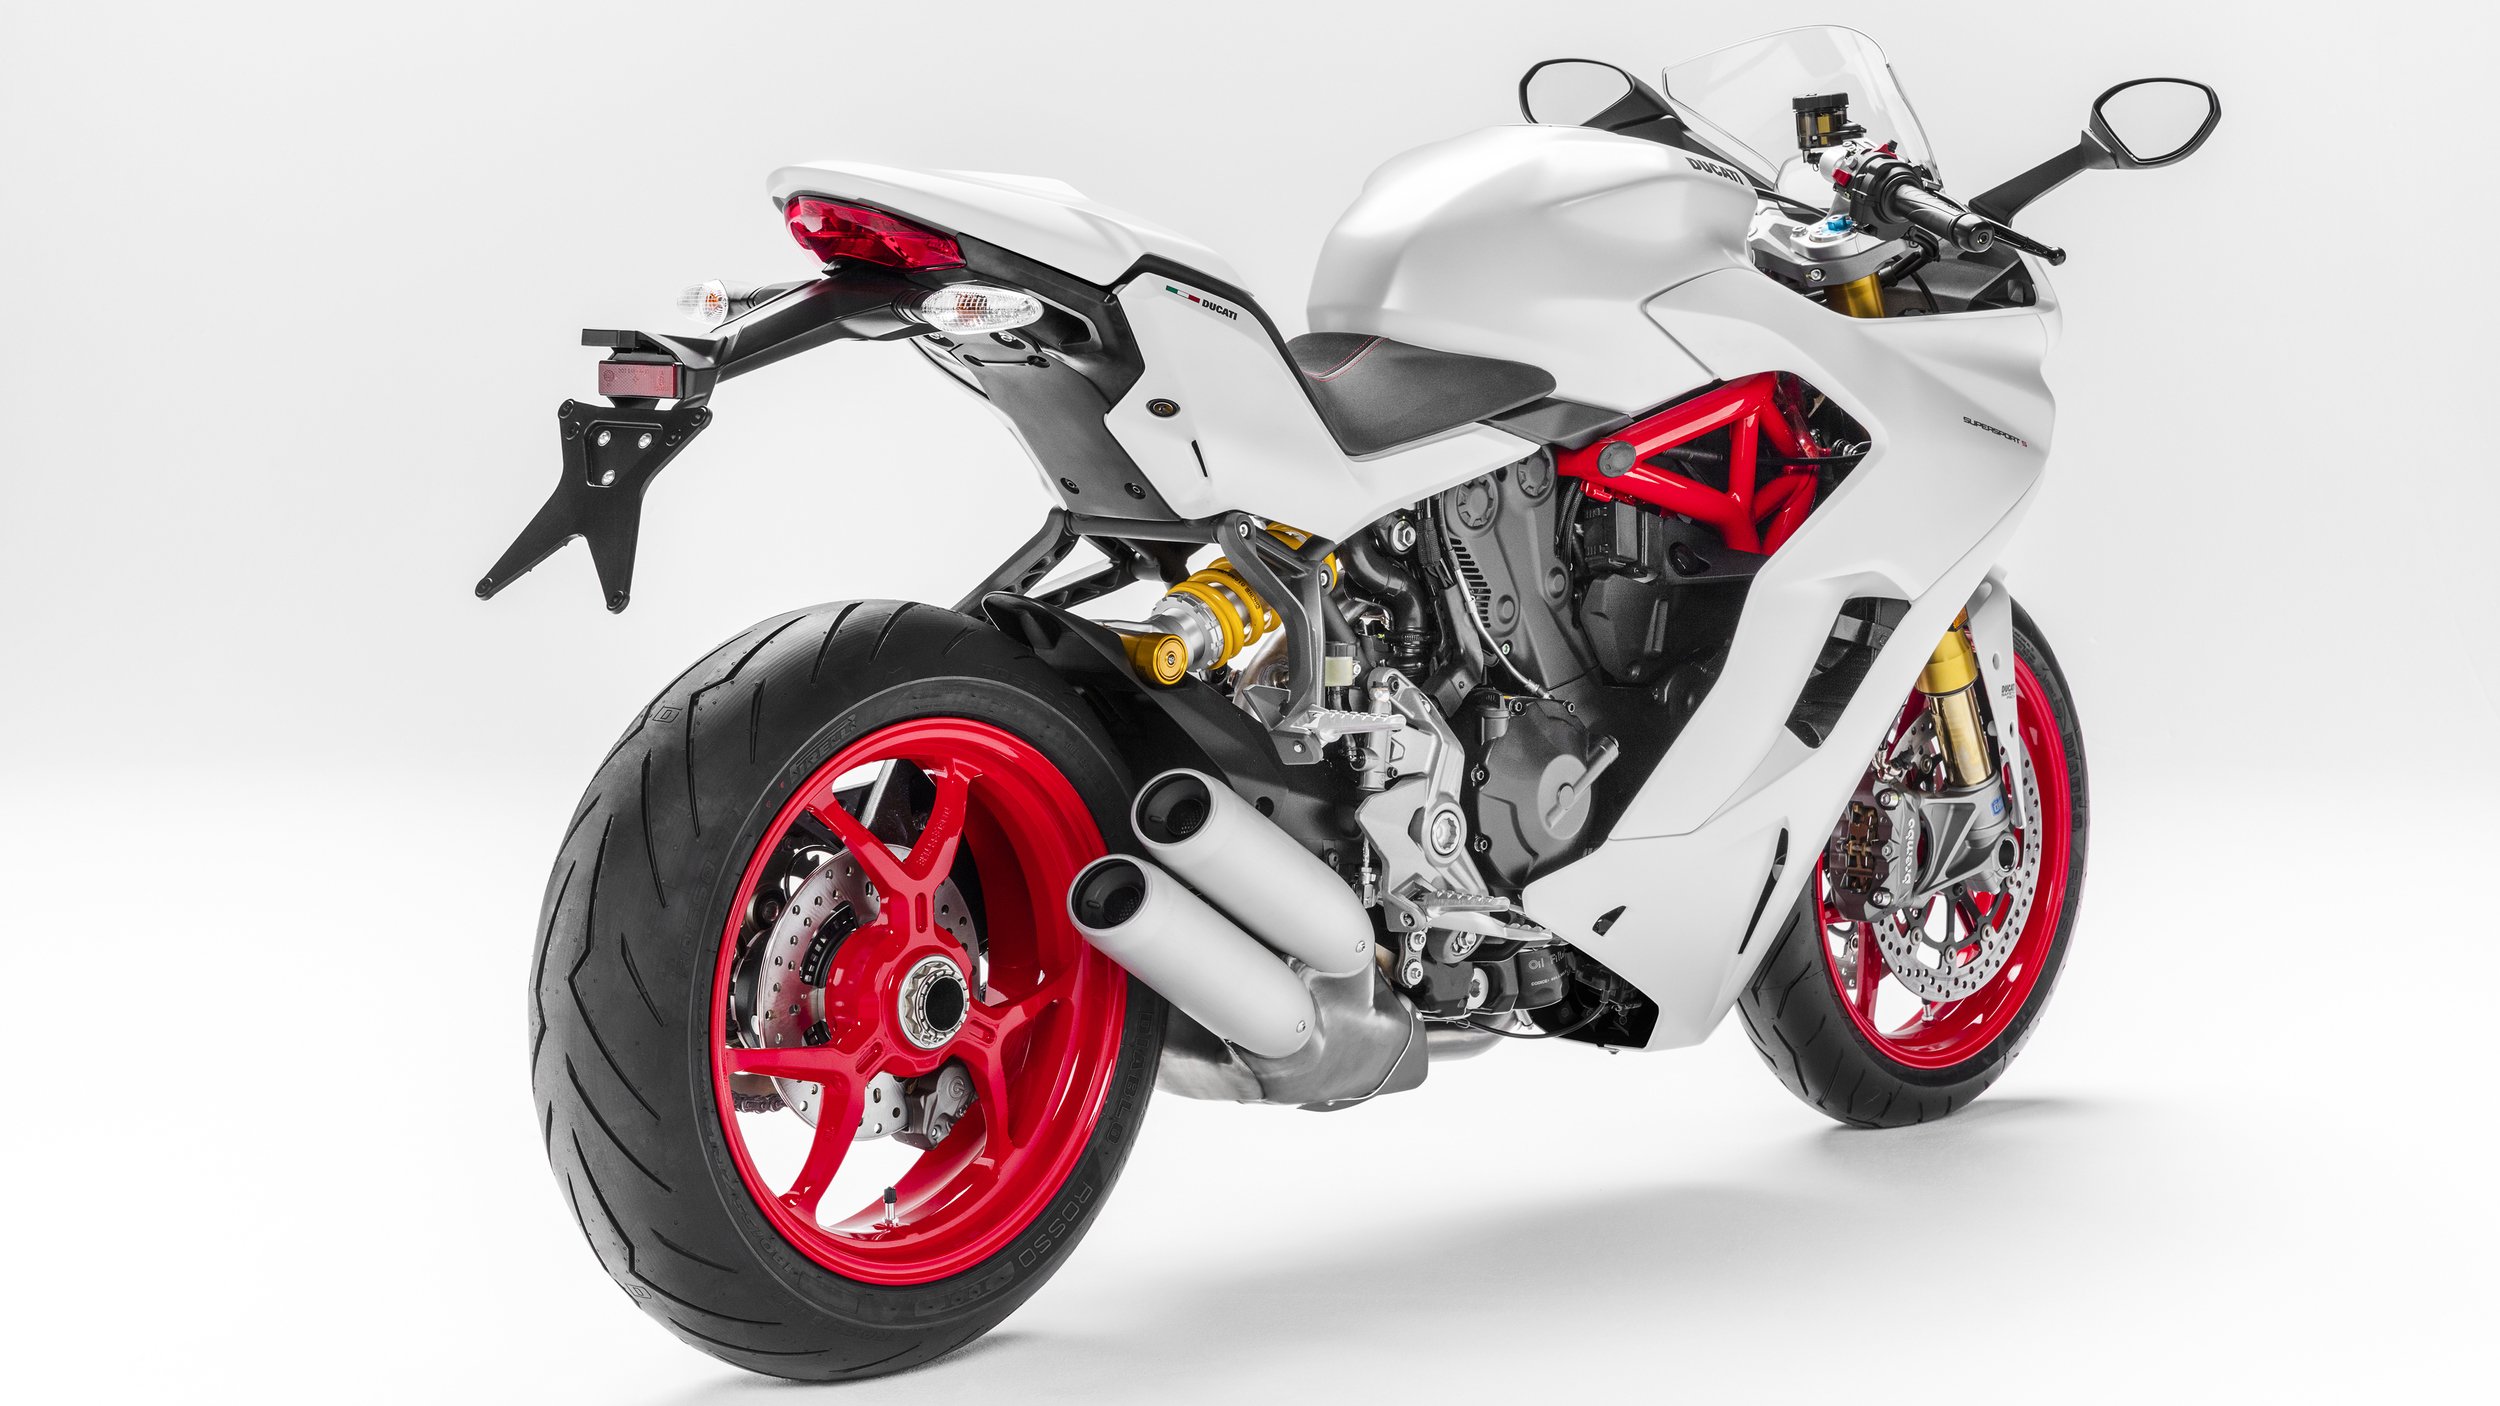 201, Ducati, Supersport s, Motorcycles Wallpaper